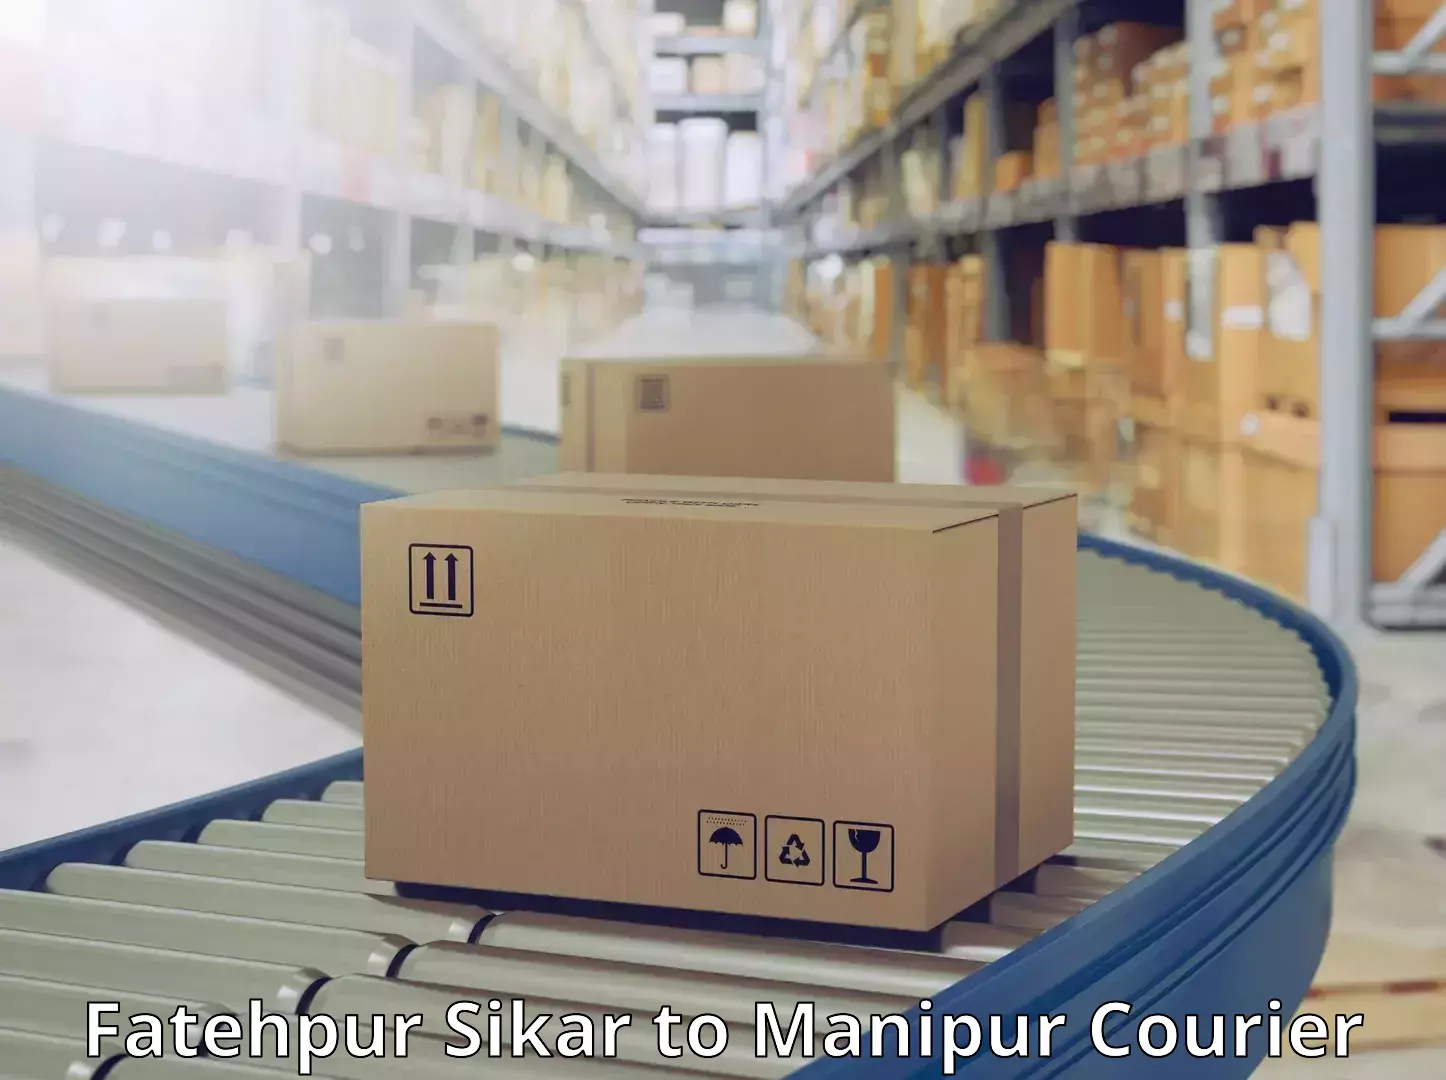 Courier service partnerships Fatehpur Sikar to Senapati